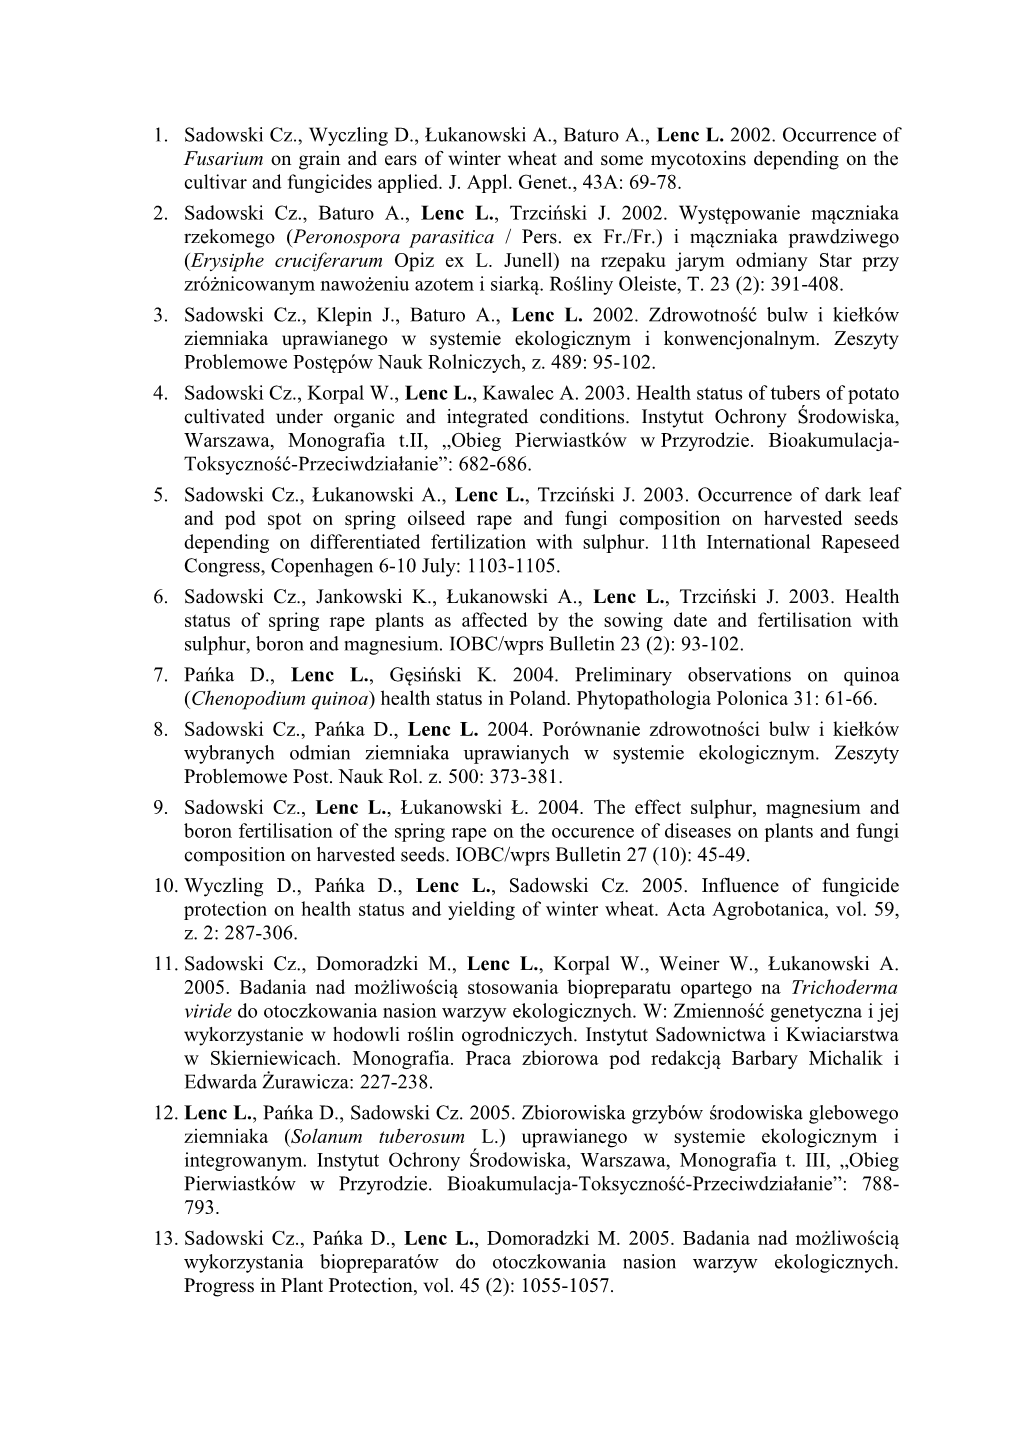 1. Sadowski Cz., Wyczling D., Łukanowski A., Baturo A., Lenc L. 2002. Occurrence of Fusarium